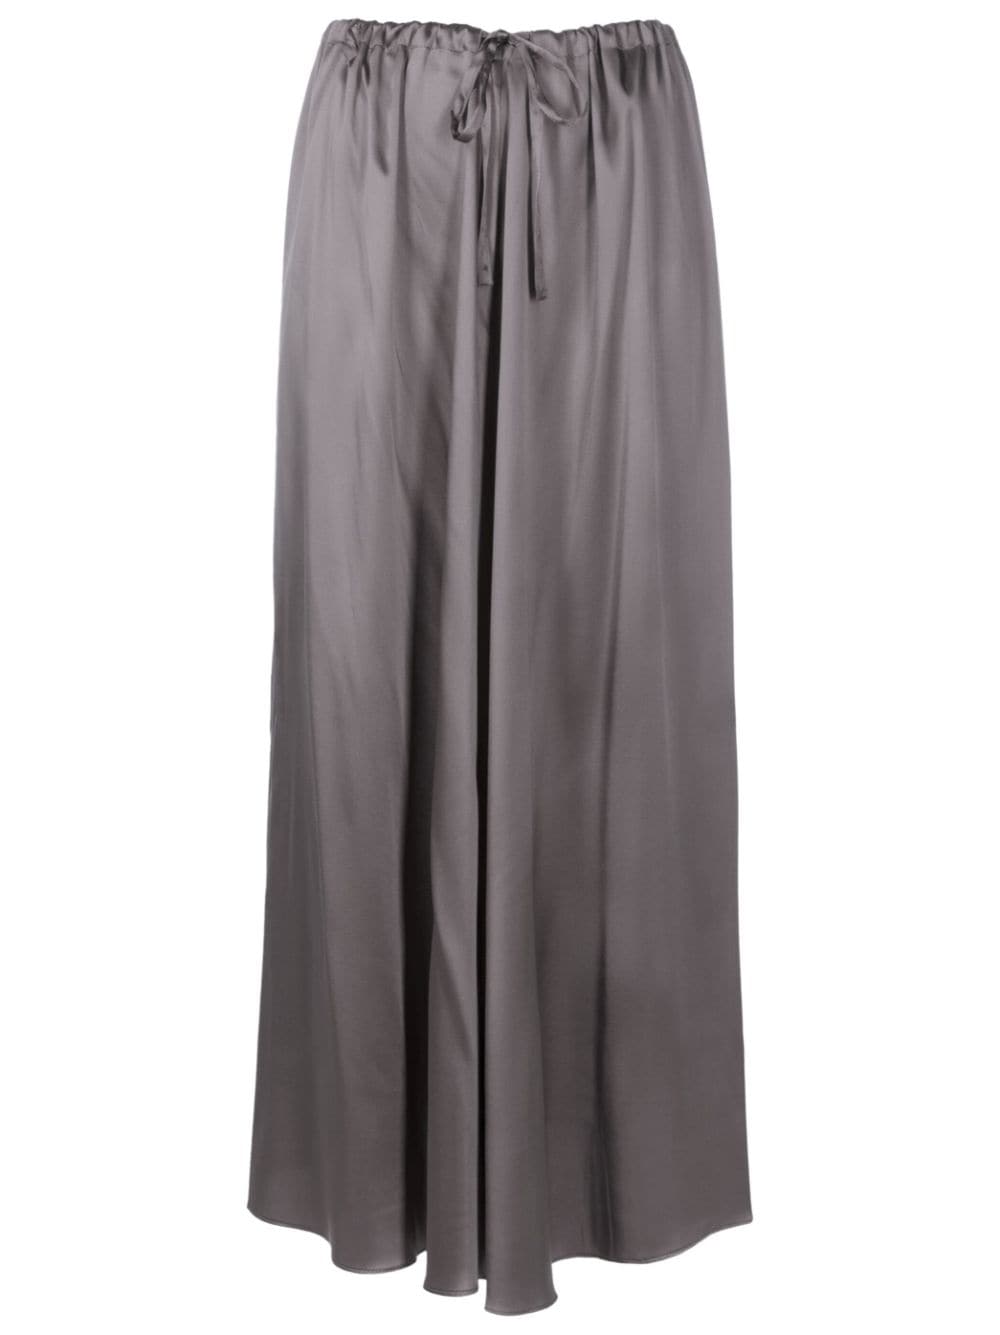 Uma | Raquel Davidowicz drawstring-waist silk midi skirt - Grey von Uma | Raquel Davidowicz